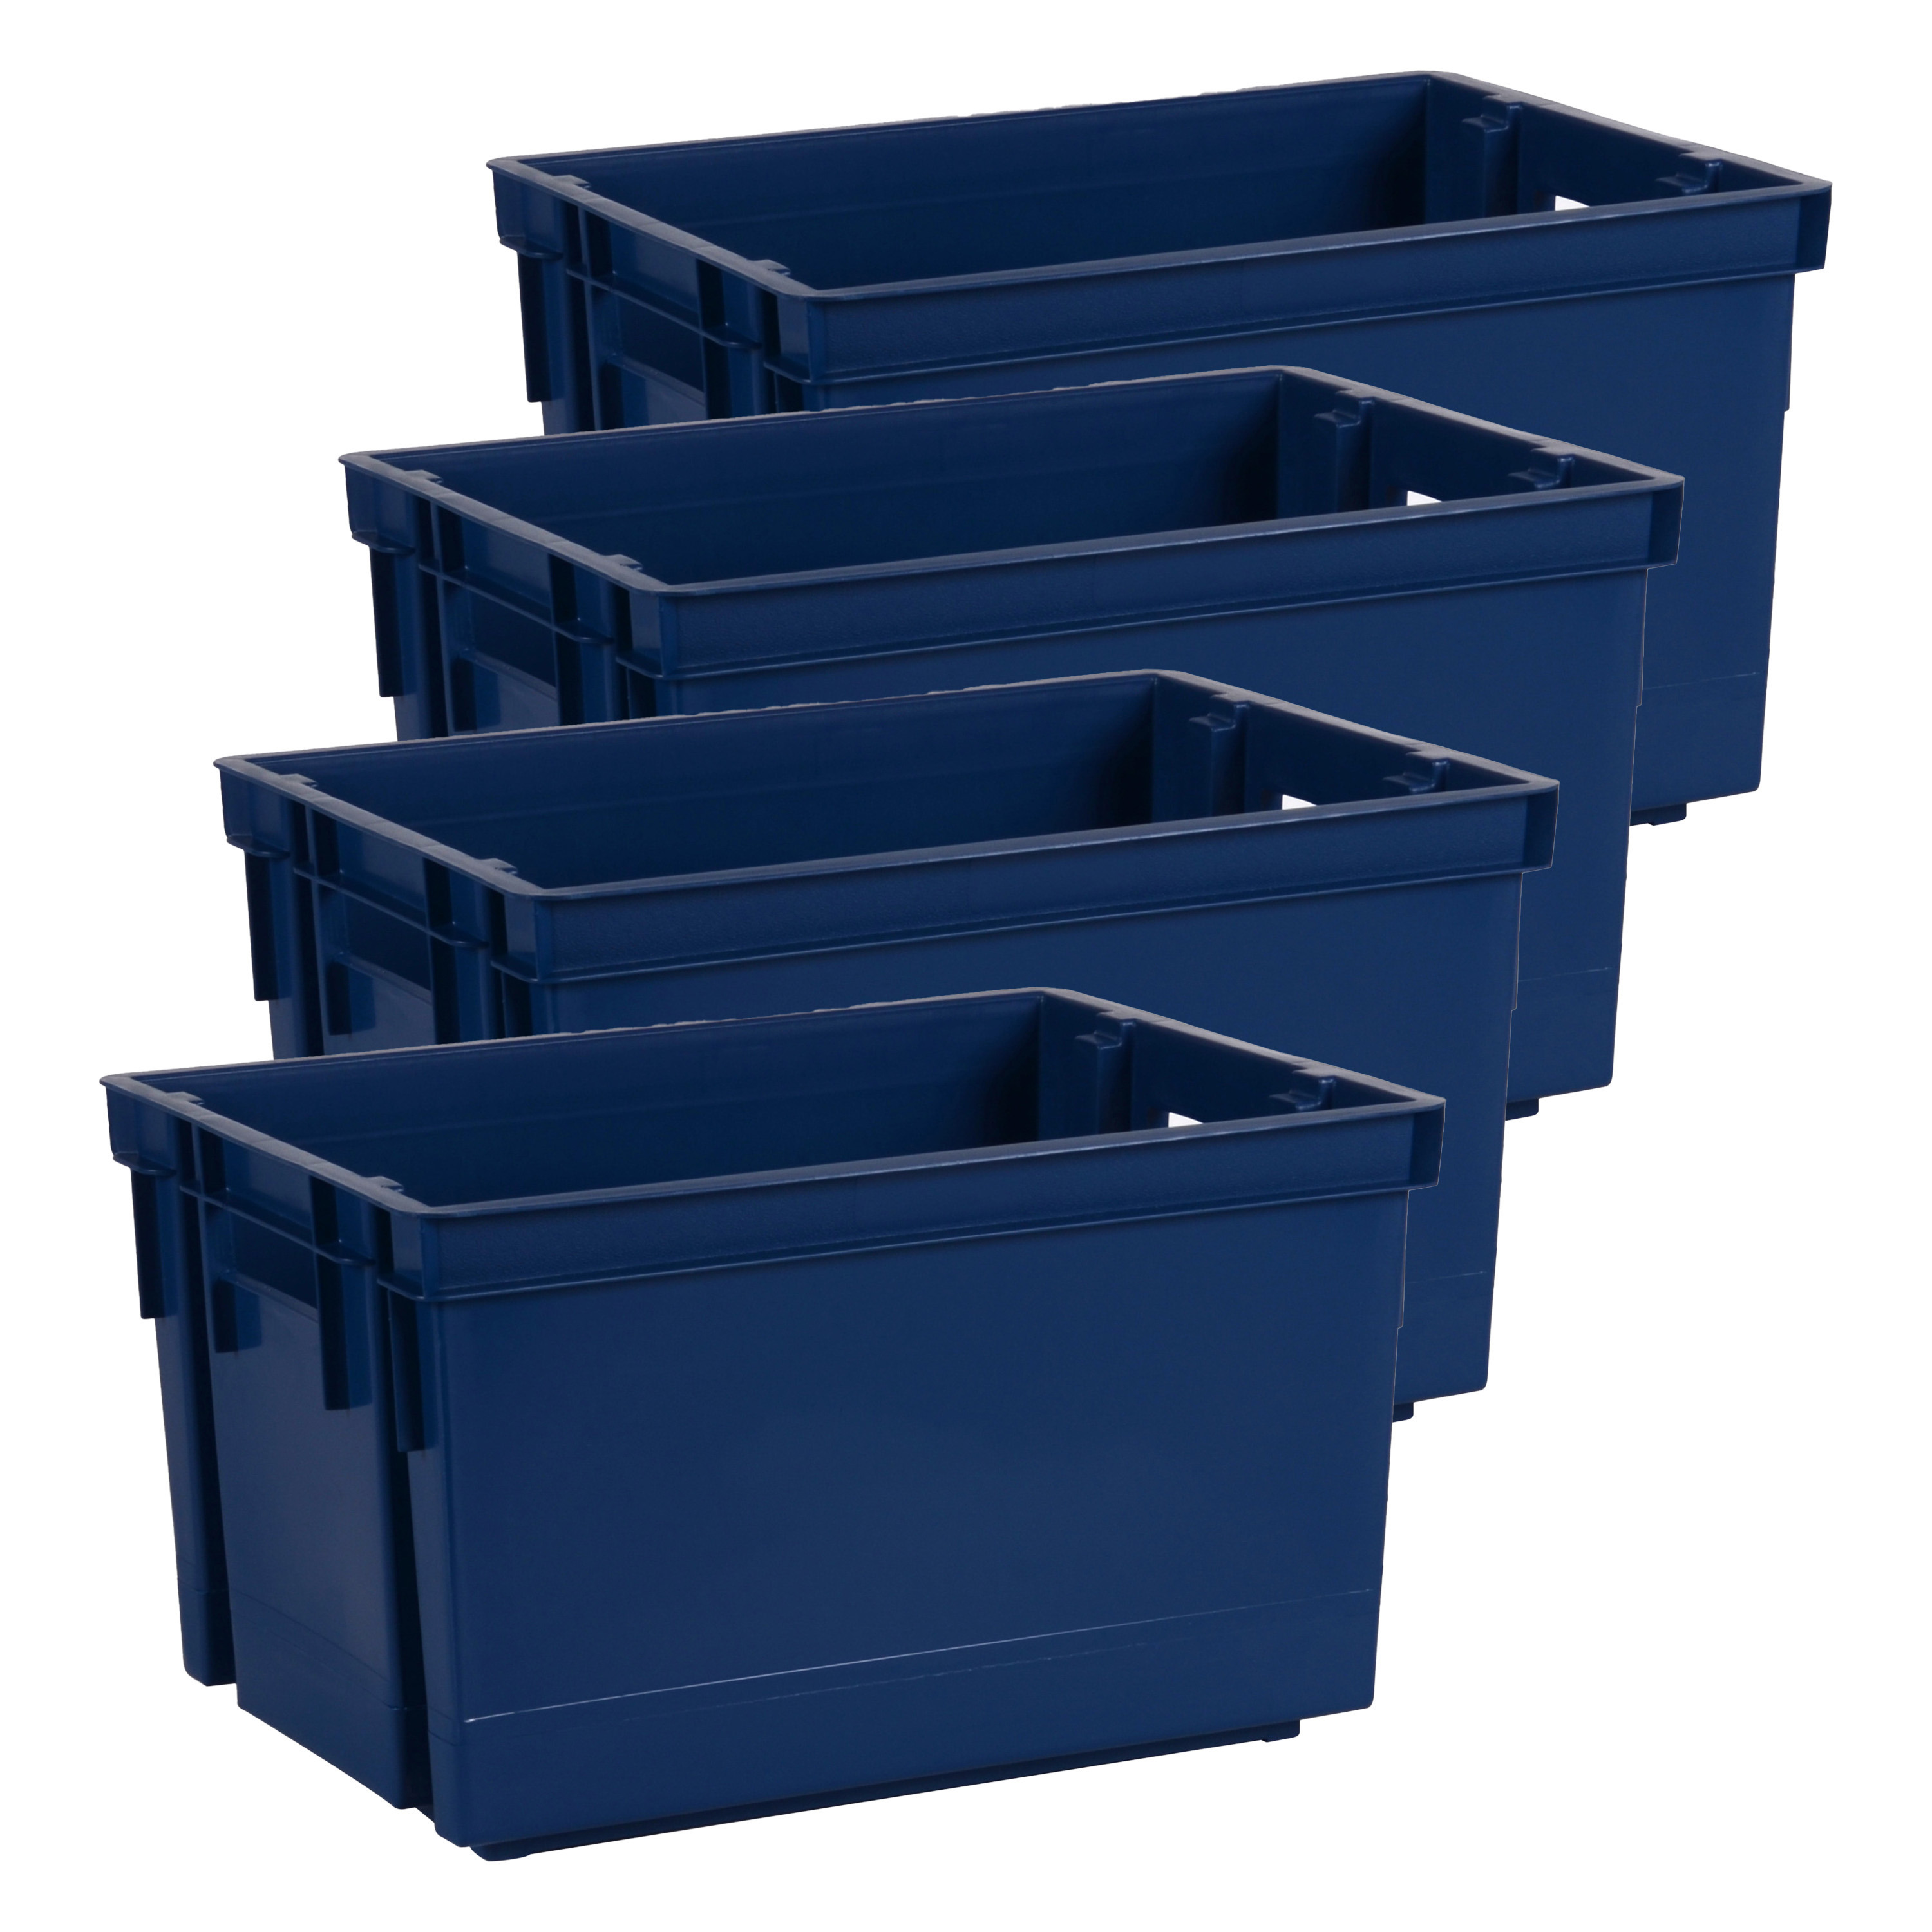 Opbergbox-opbergkrat 20 L 8x blauw kunststof 39 x 29 x 23 cm stapelbaar-nestbaar